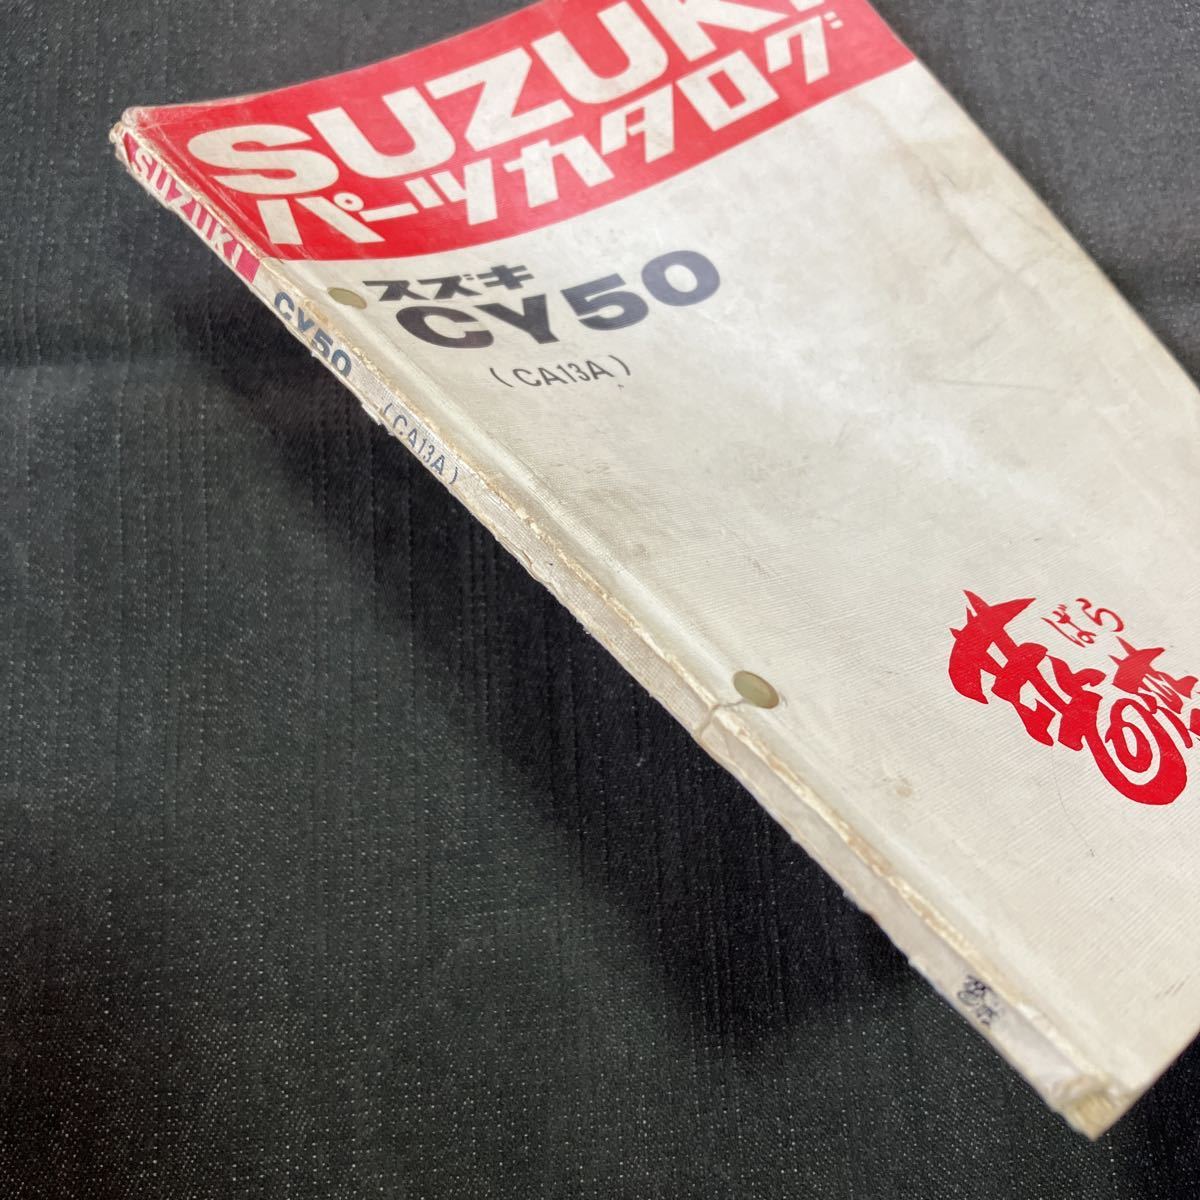 p081200 Suzuki rose CY50 CA13A parts catalog 1984 year 7 month ..BARA